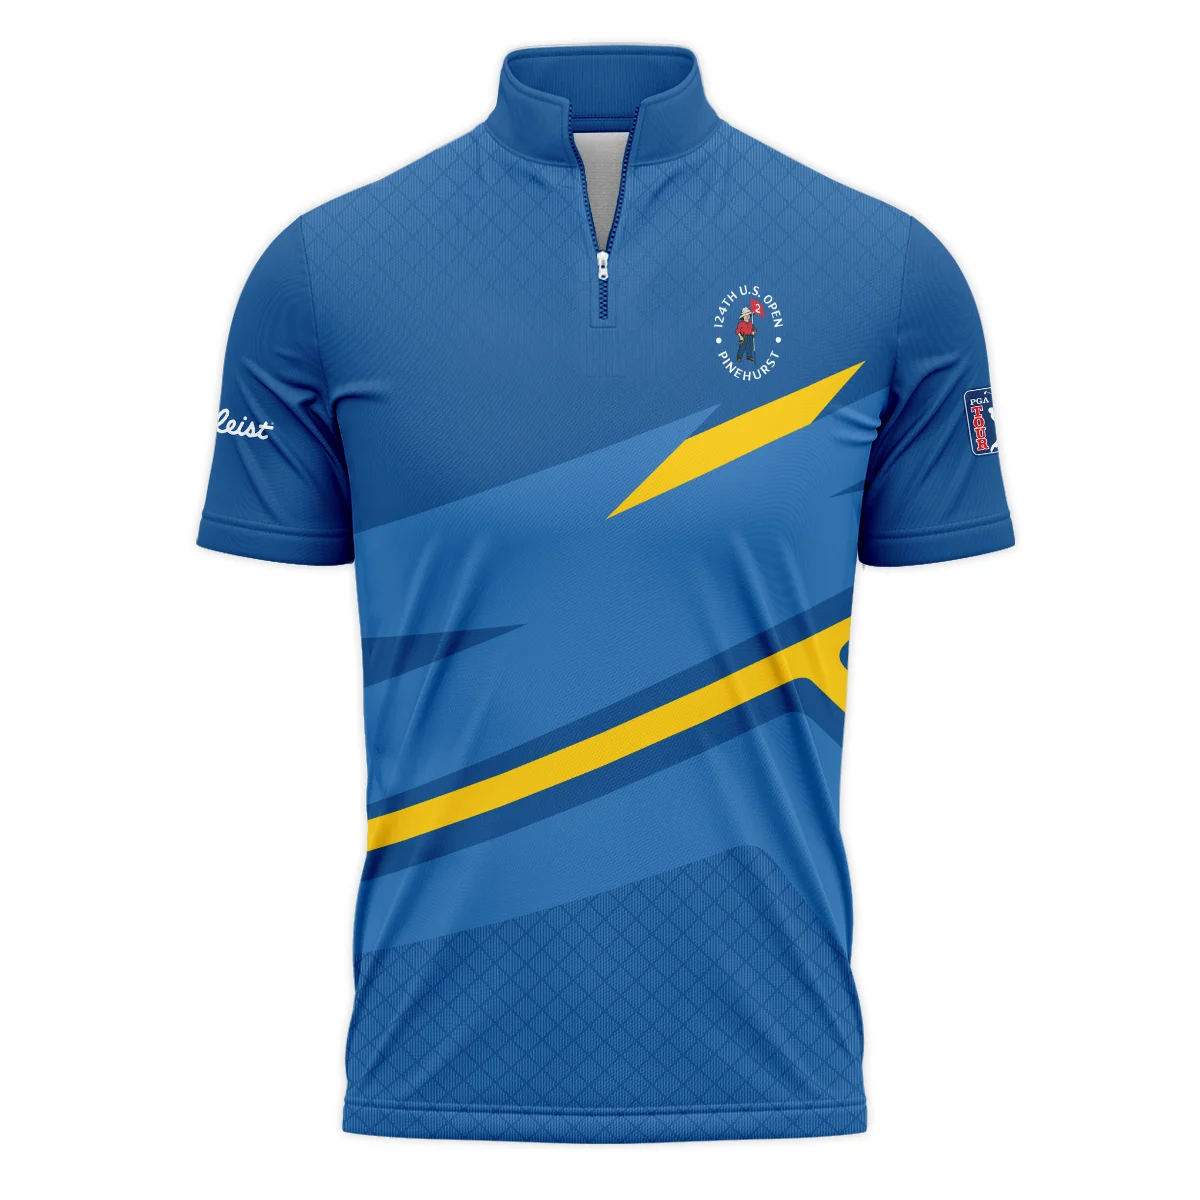 Titleist 124th U.S. Open Pinehurst Blue Yellow Mix Pattern Vneck Polo Shirt Style Classic